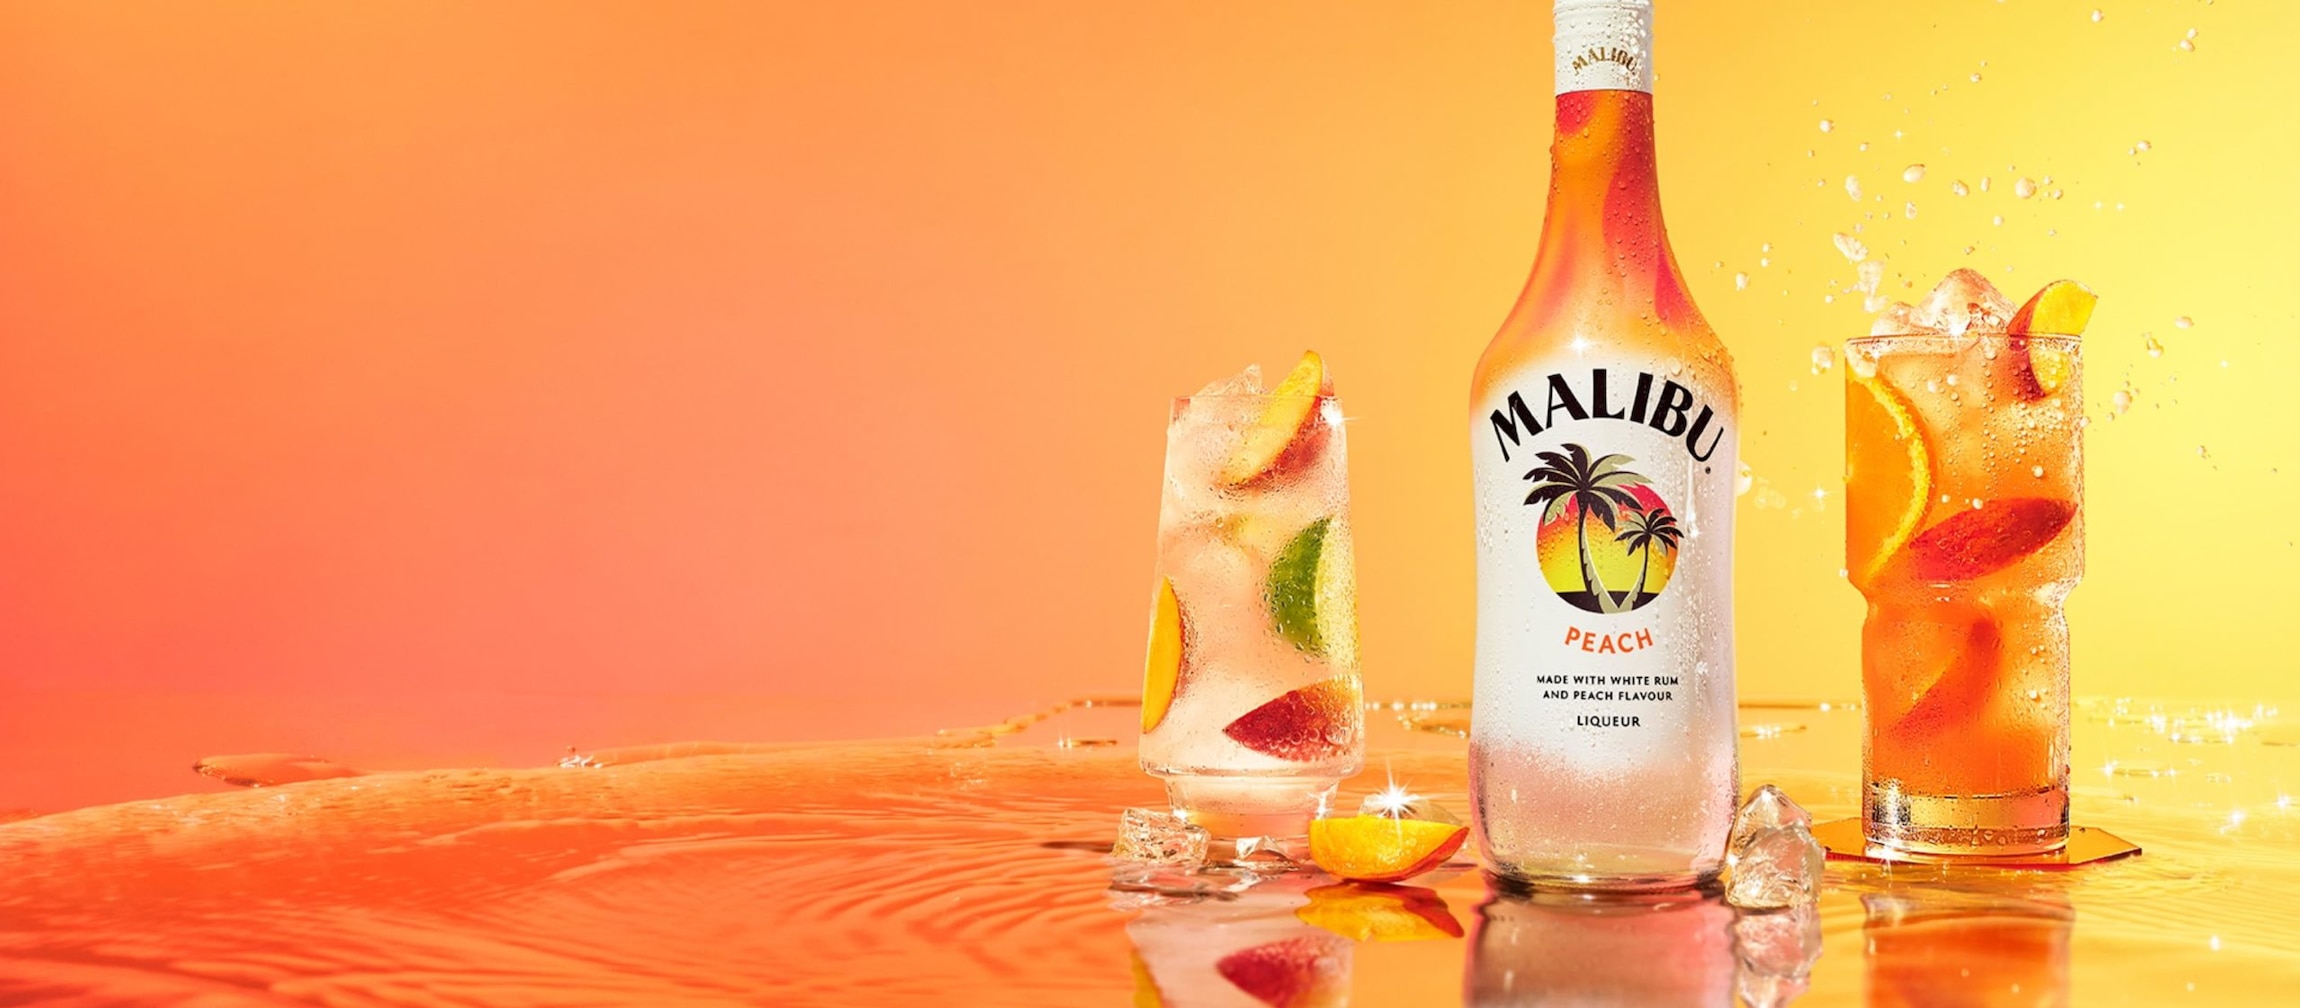 Malibu peach with drinks